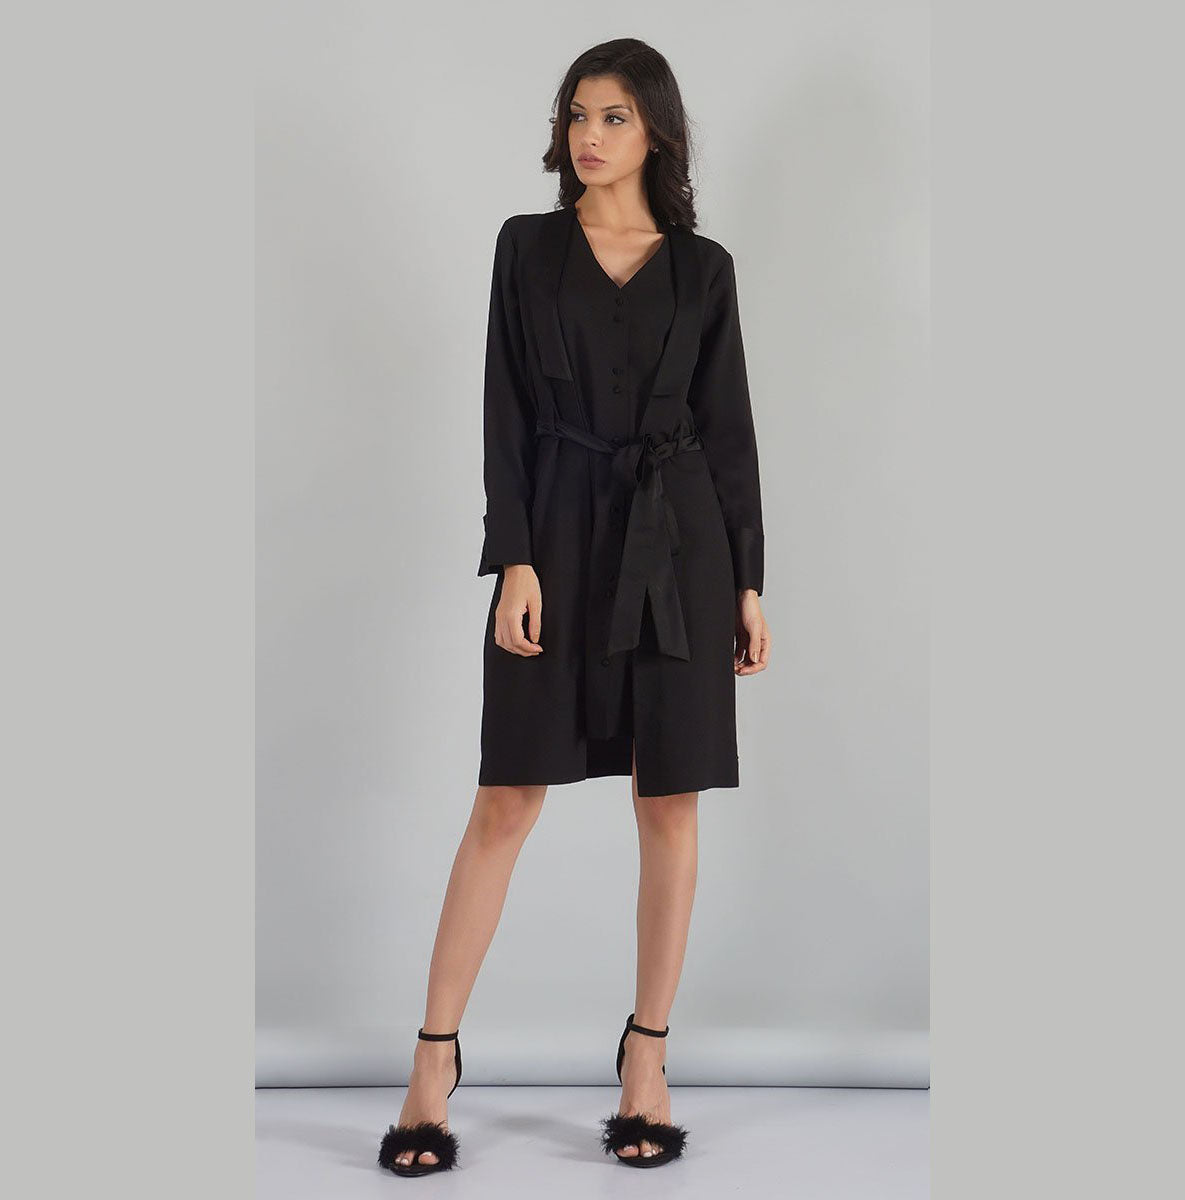 Tuxedo Dress in Black | eBay